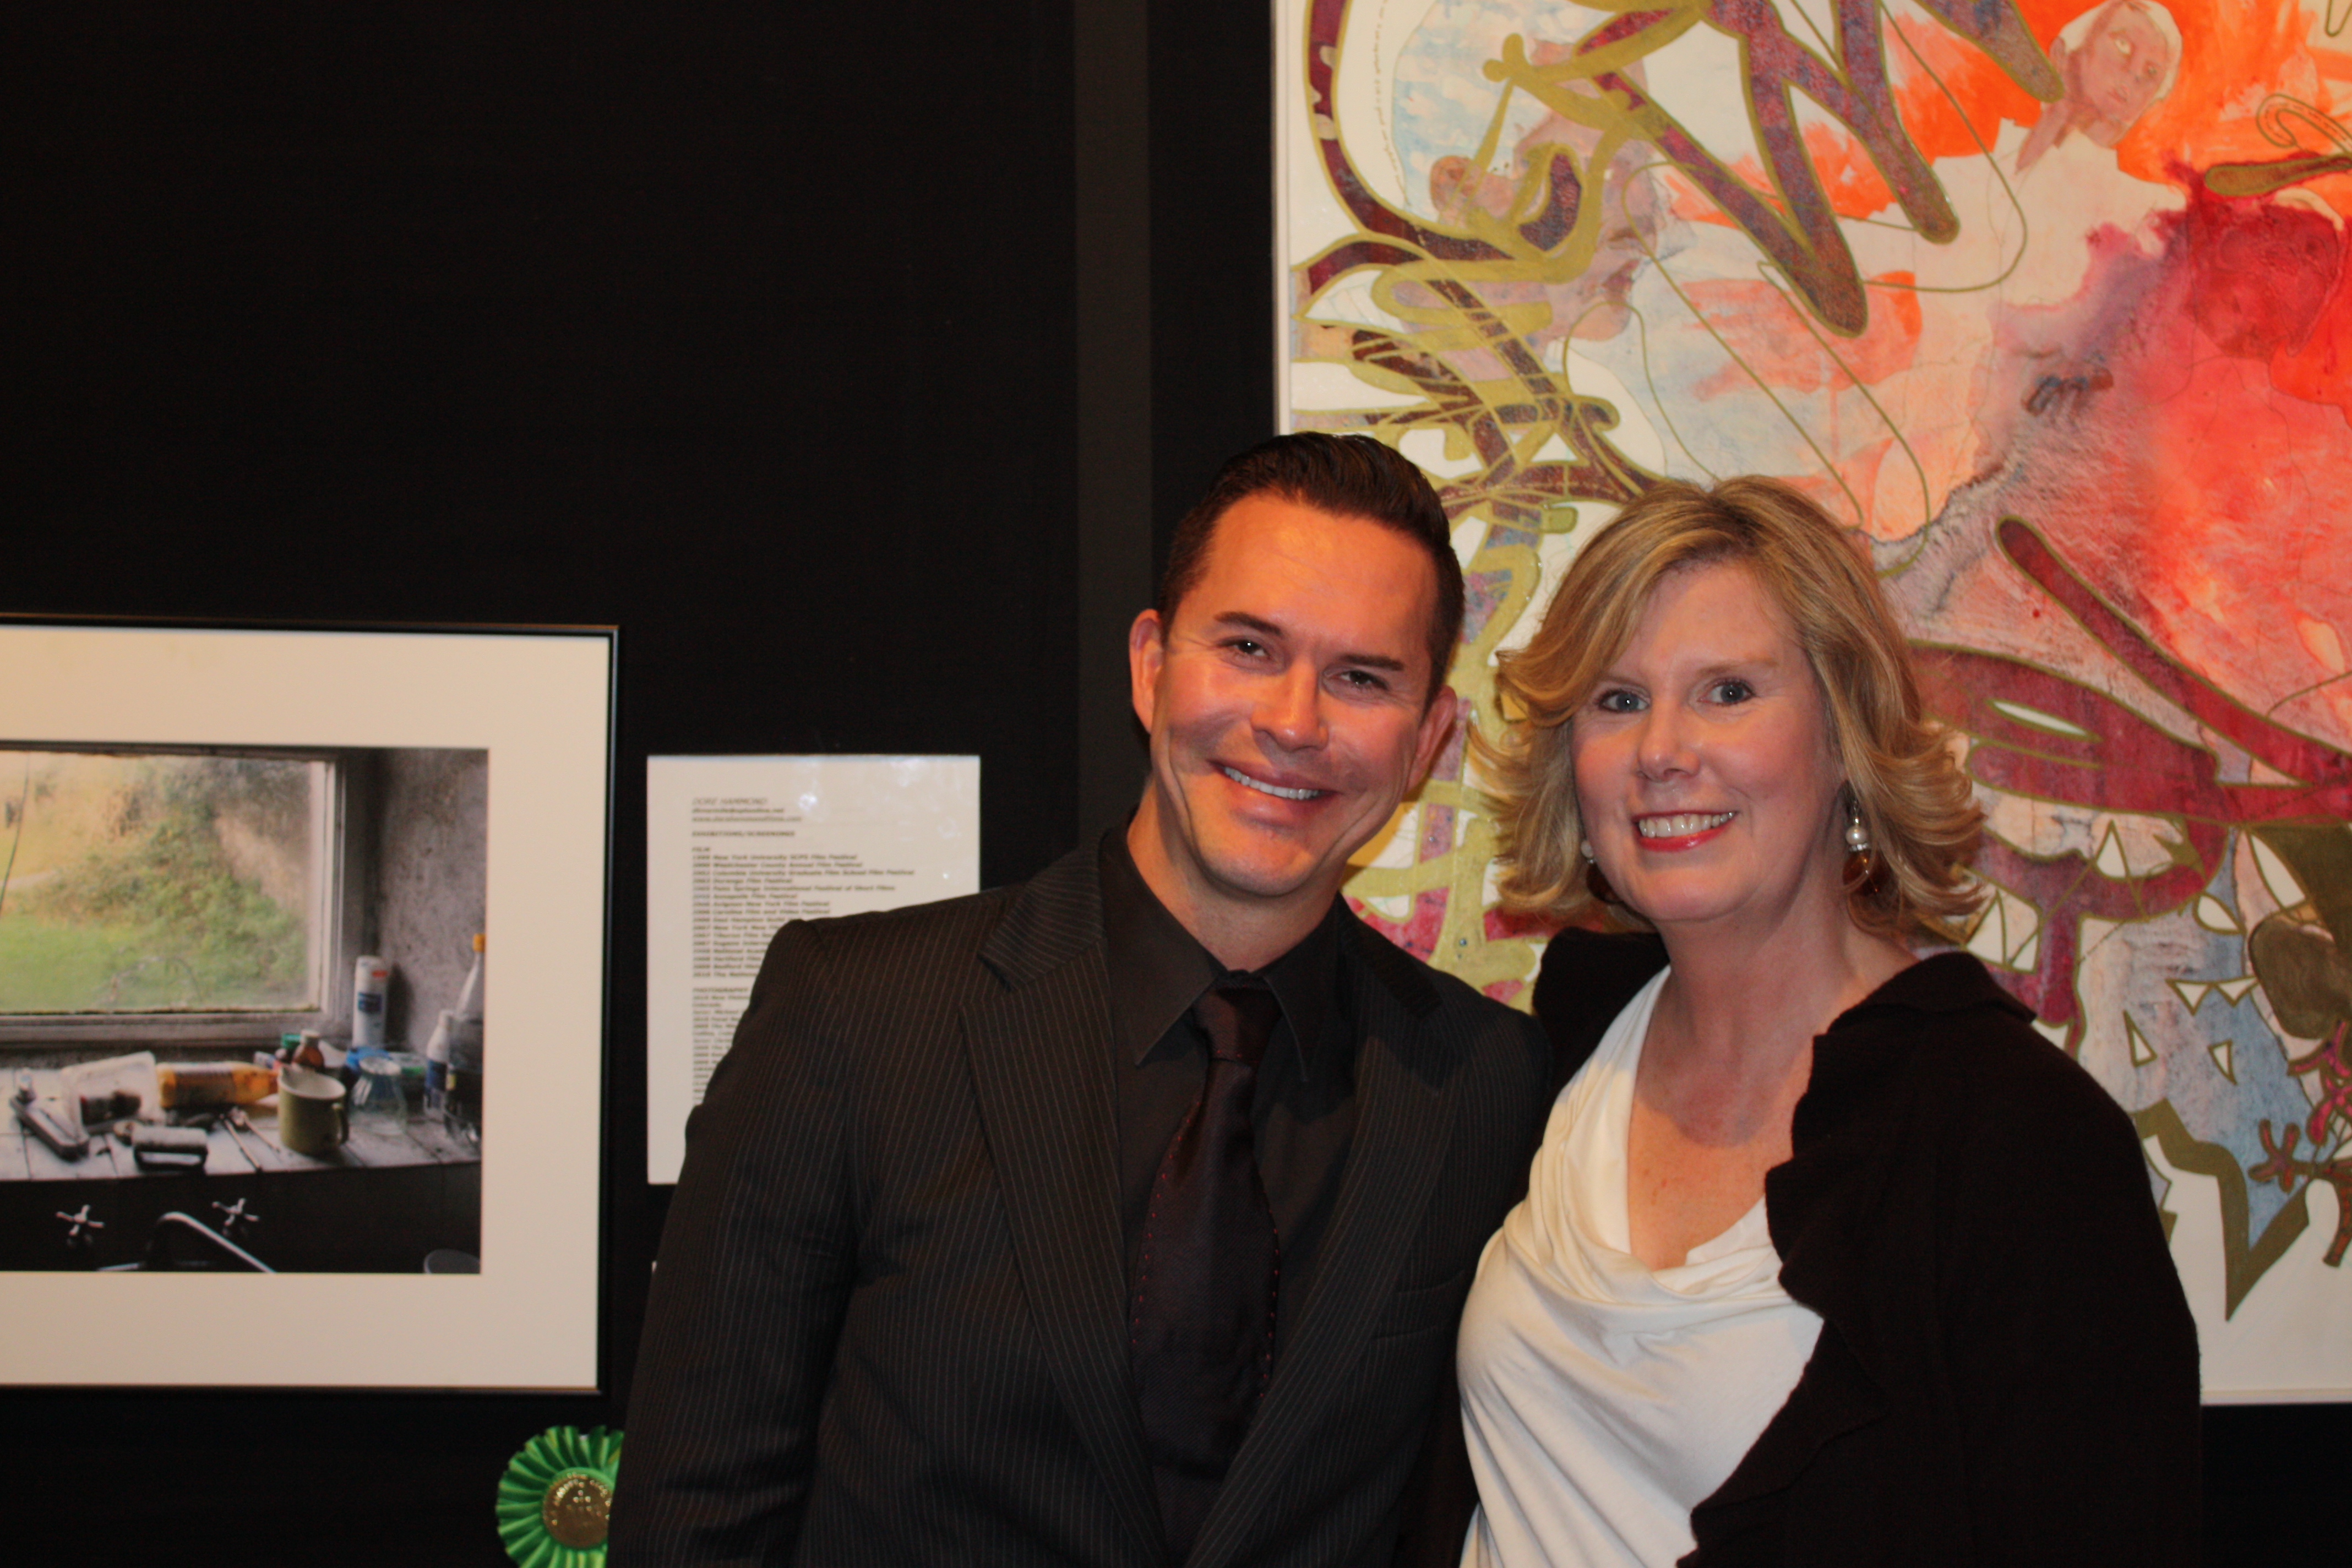 National Arts Club 111th Annual Awards reception. Dore Hammond with fellow award winning artist.